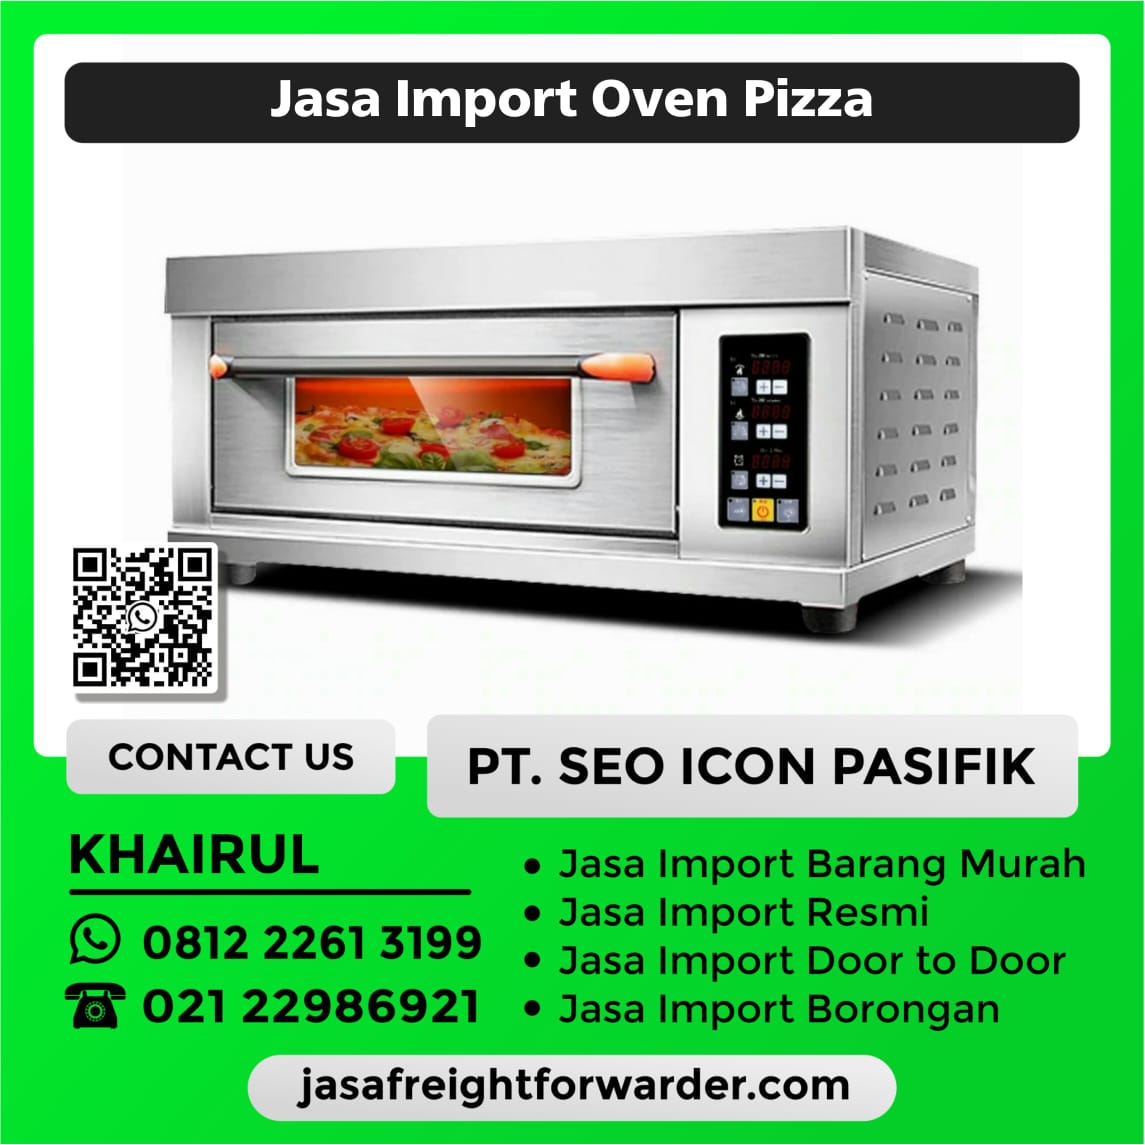 Jasa-Import-Oven-Pizza.jpeg